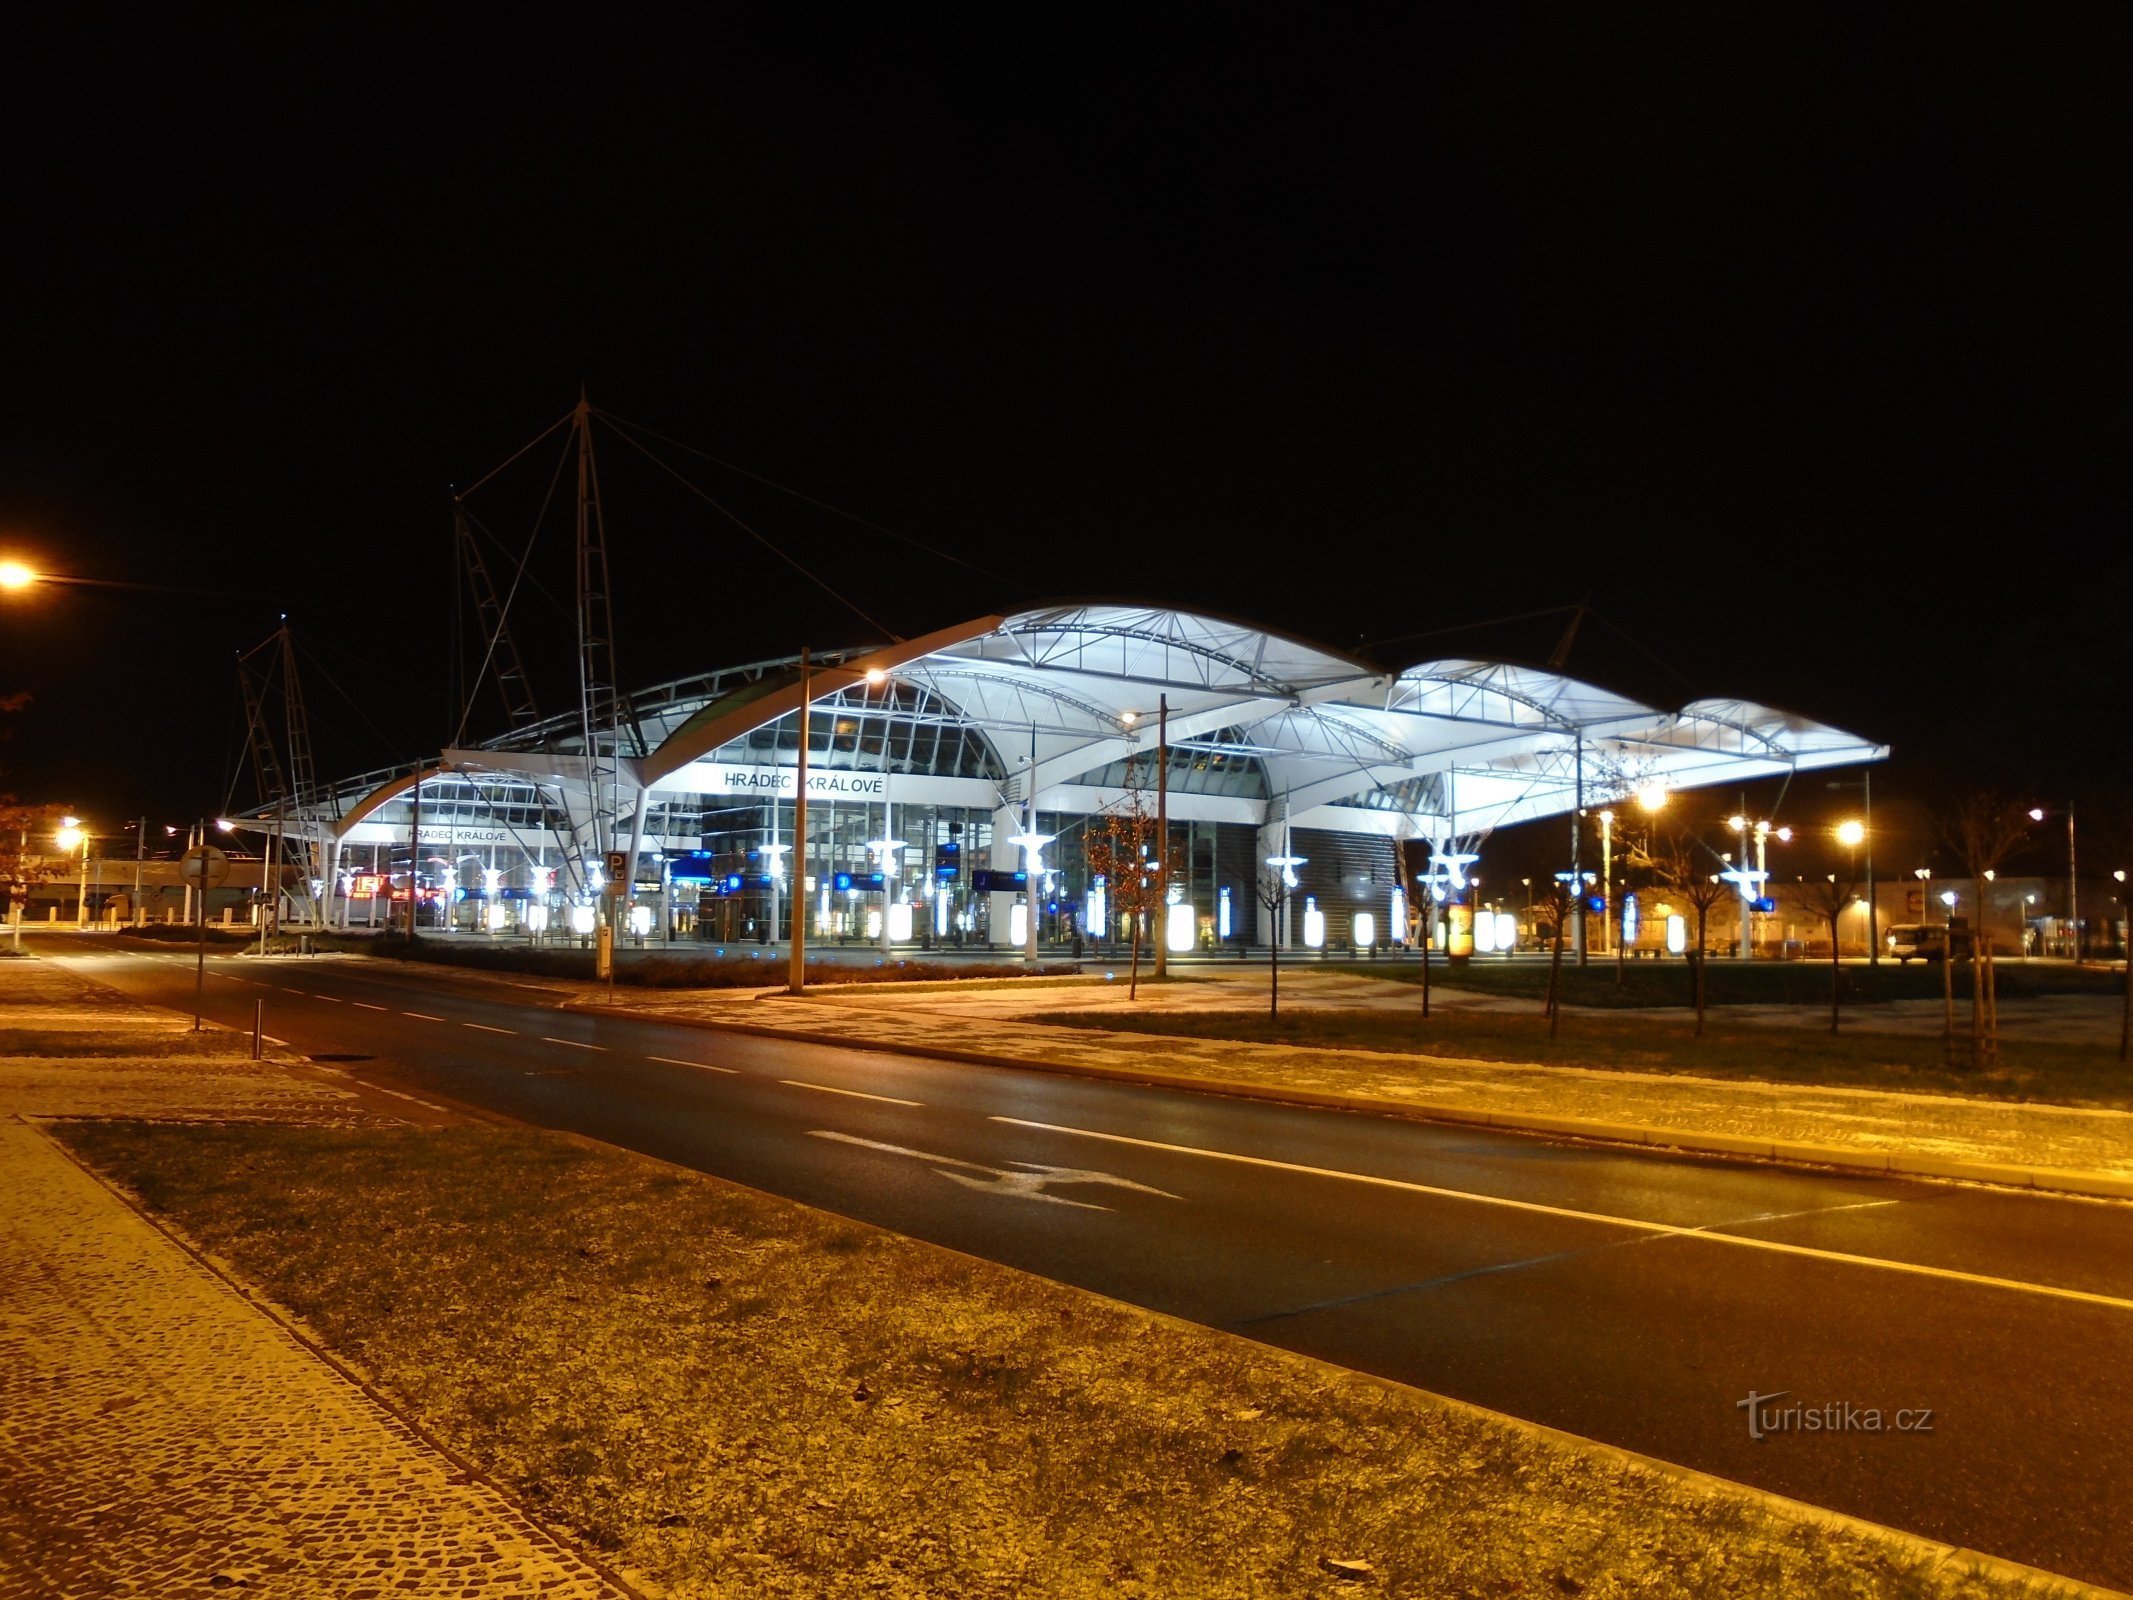 Terminal voor massatransport (Hradec Králové)